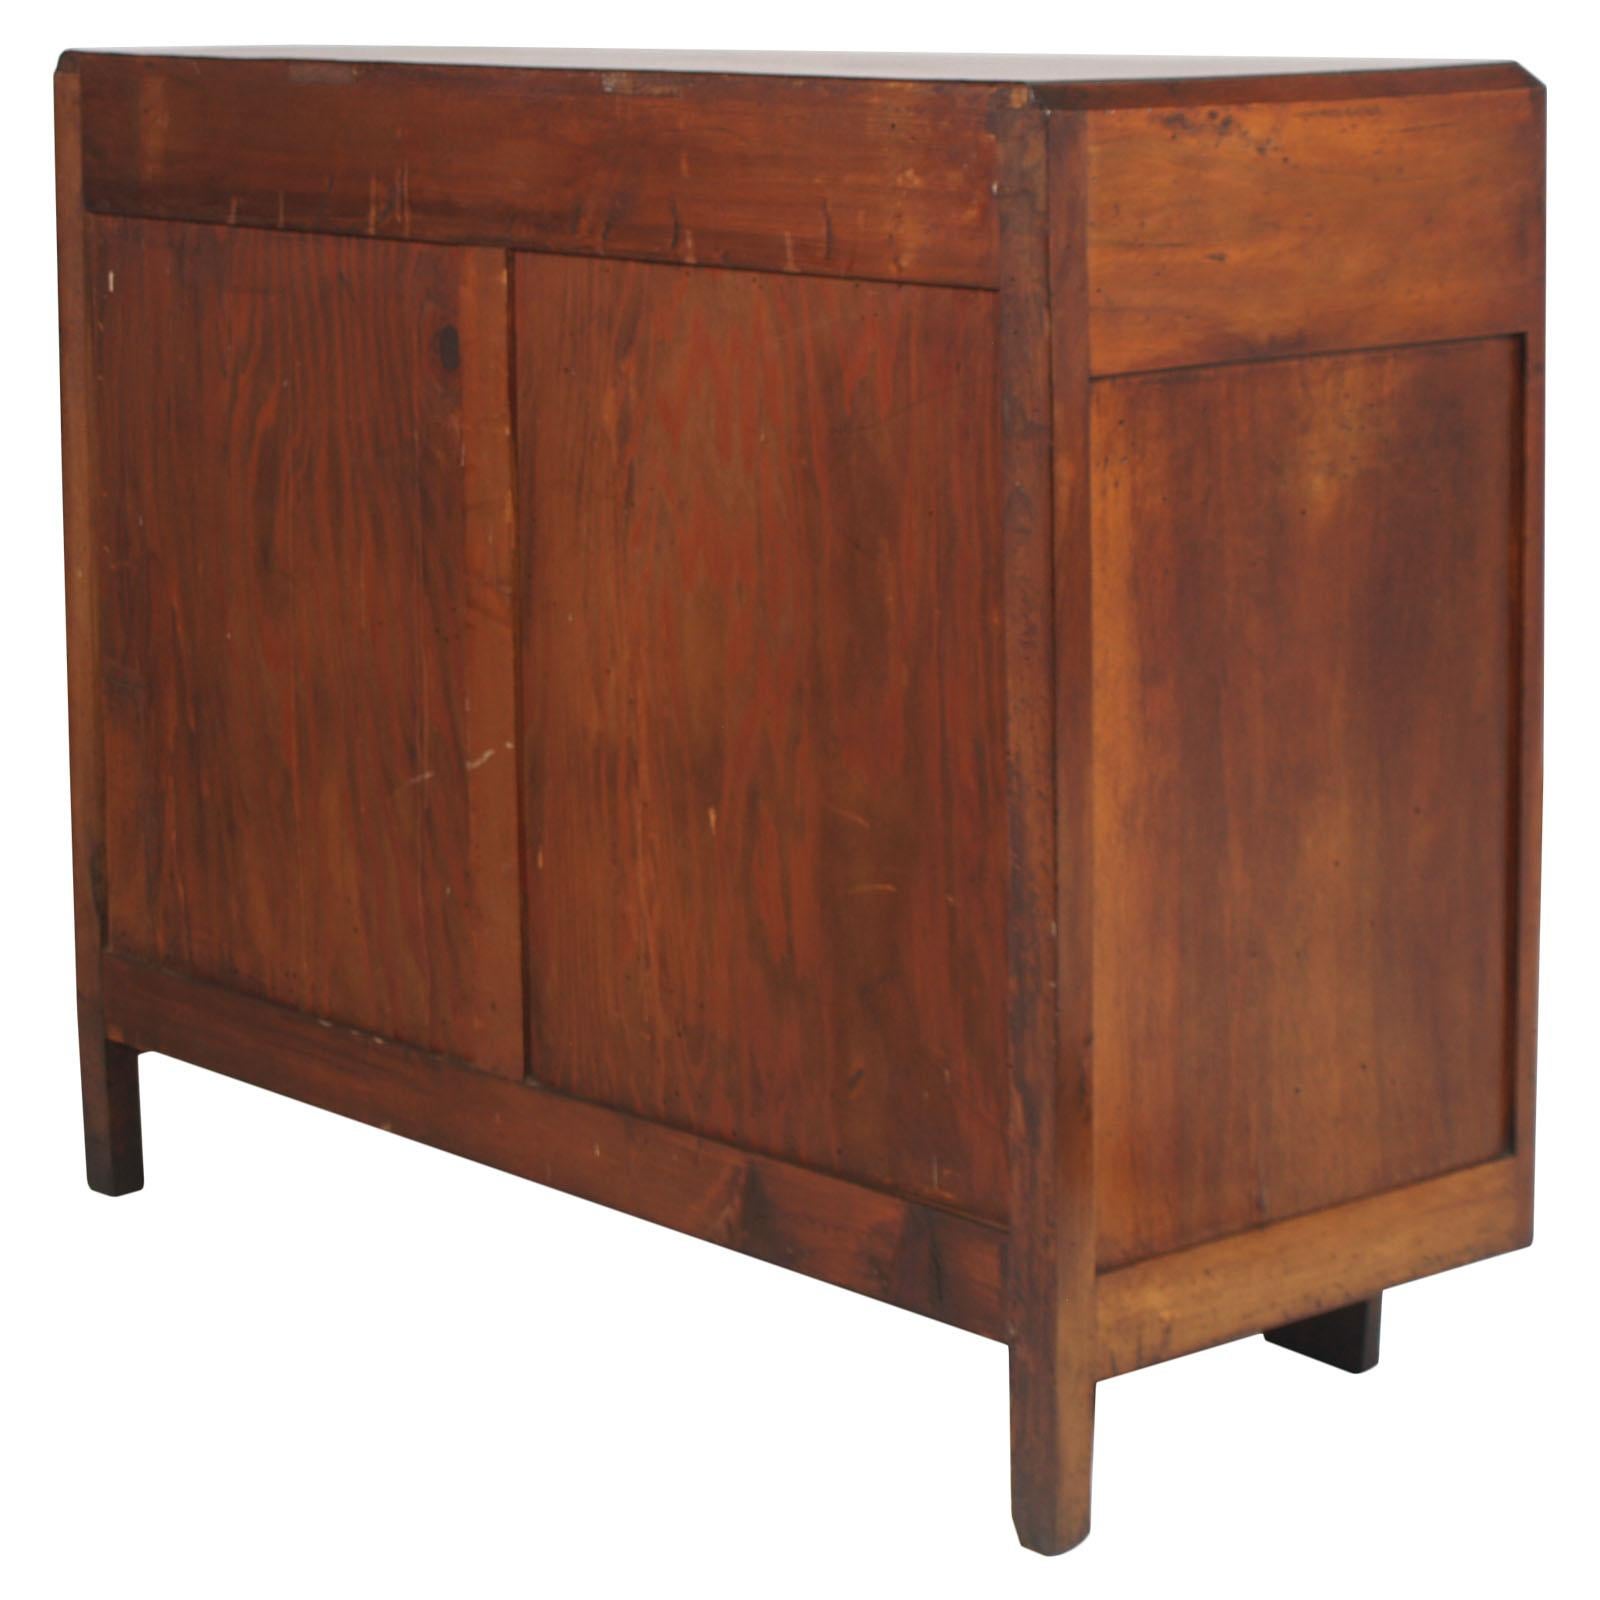 1930s Art Deco Commode Dresser, Walnut, Burl Walnut Restored and Polished to Wax 3